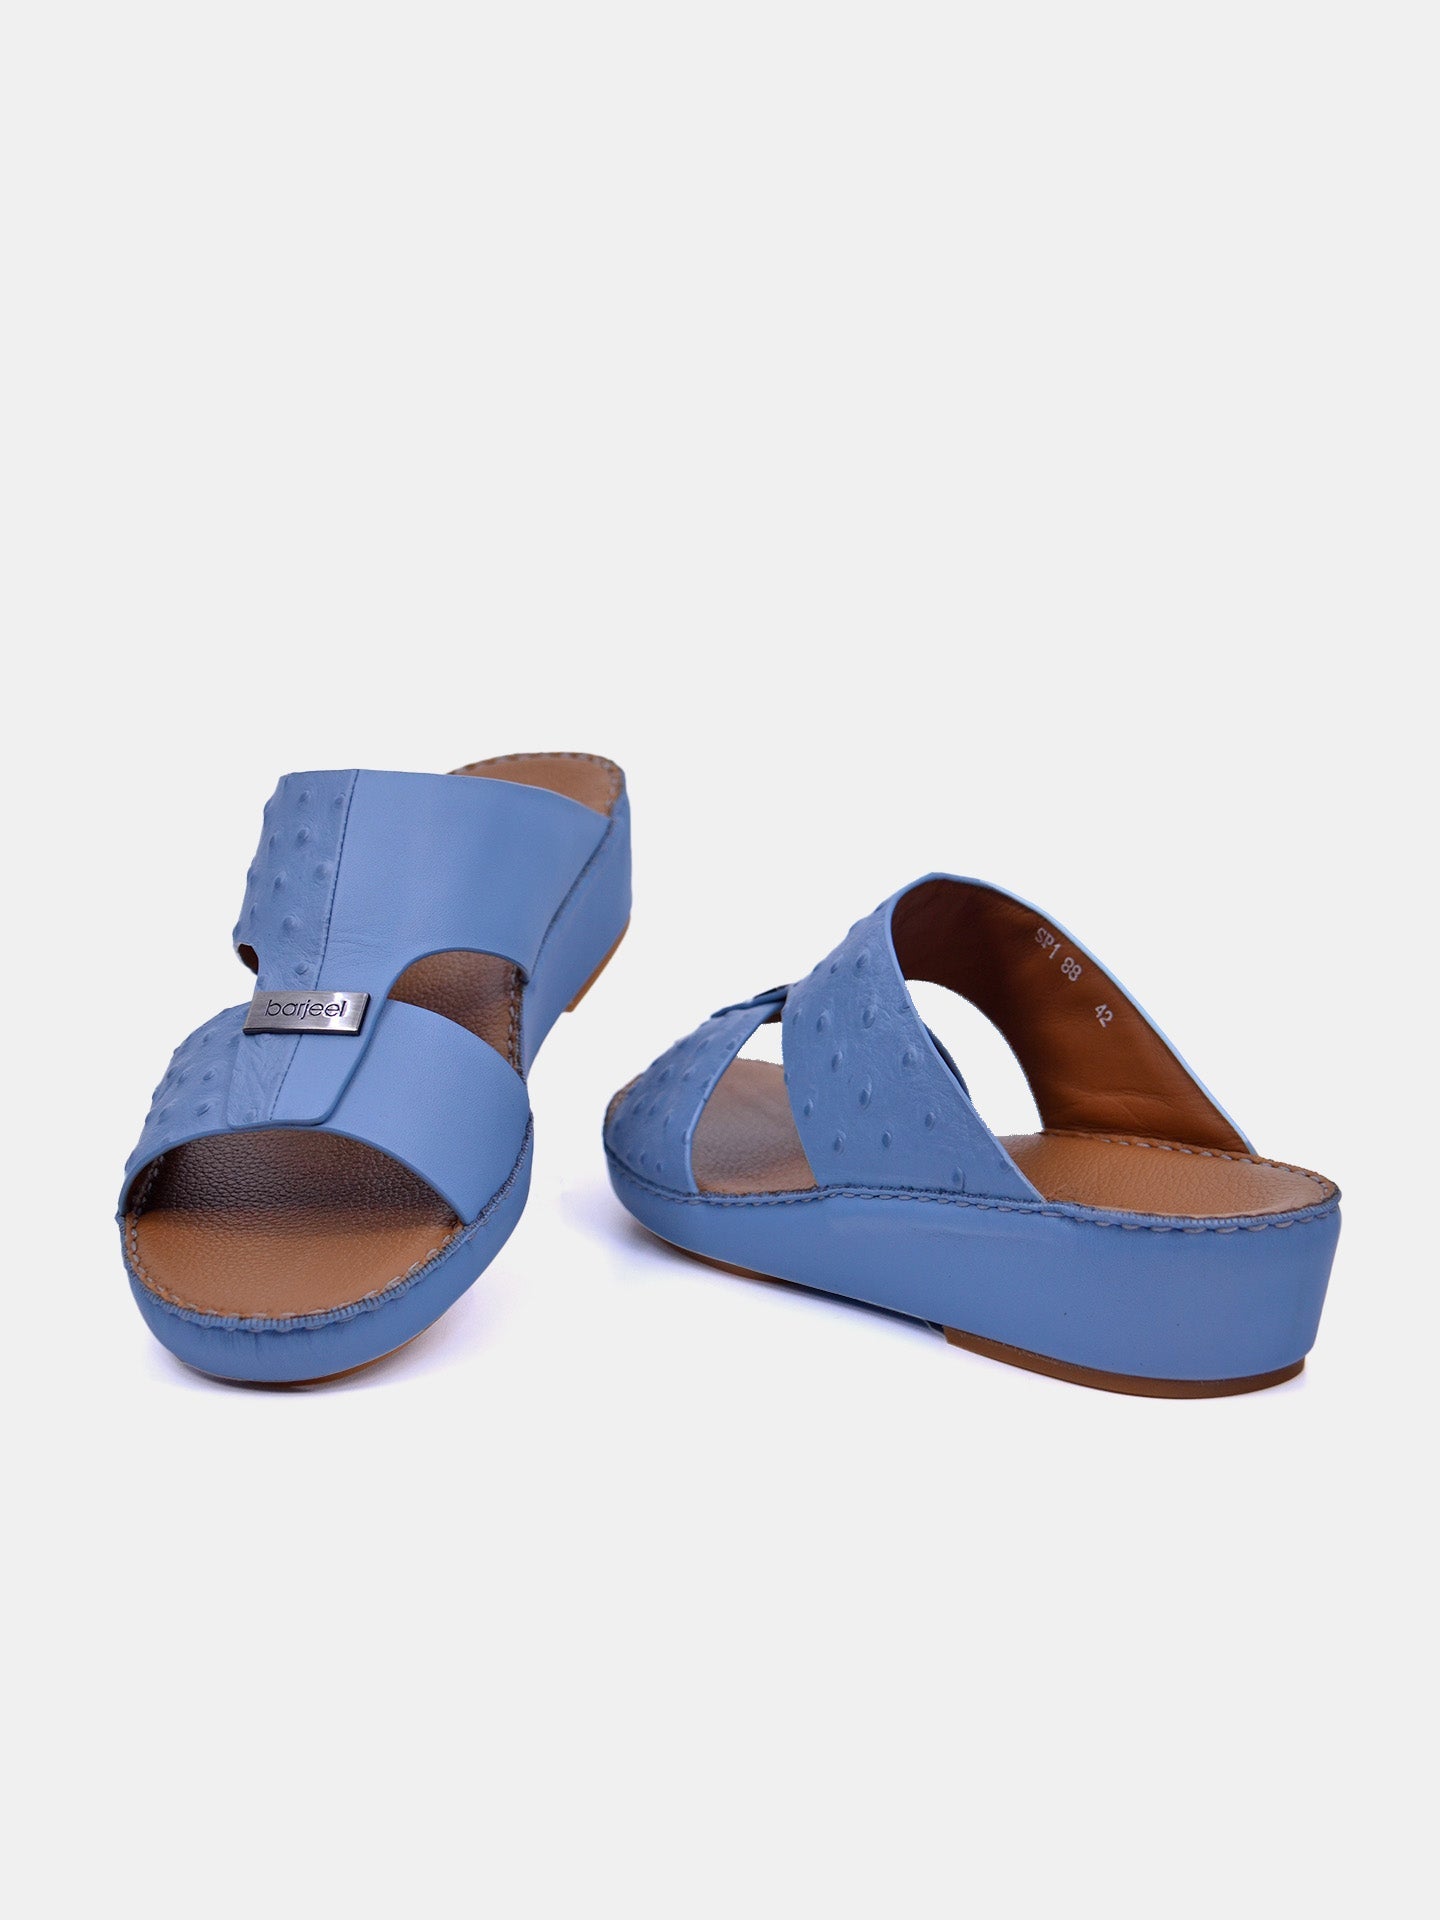 Barjeel Uno SP-188 Men's Arabic Sandals #color_Blue